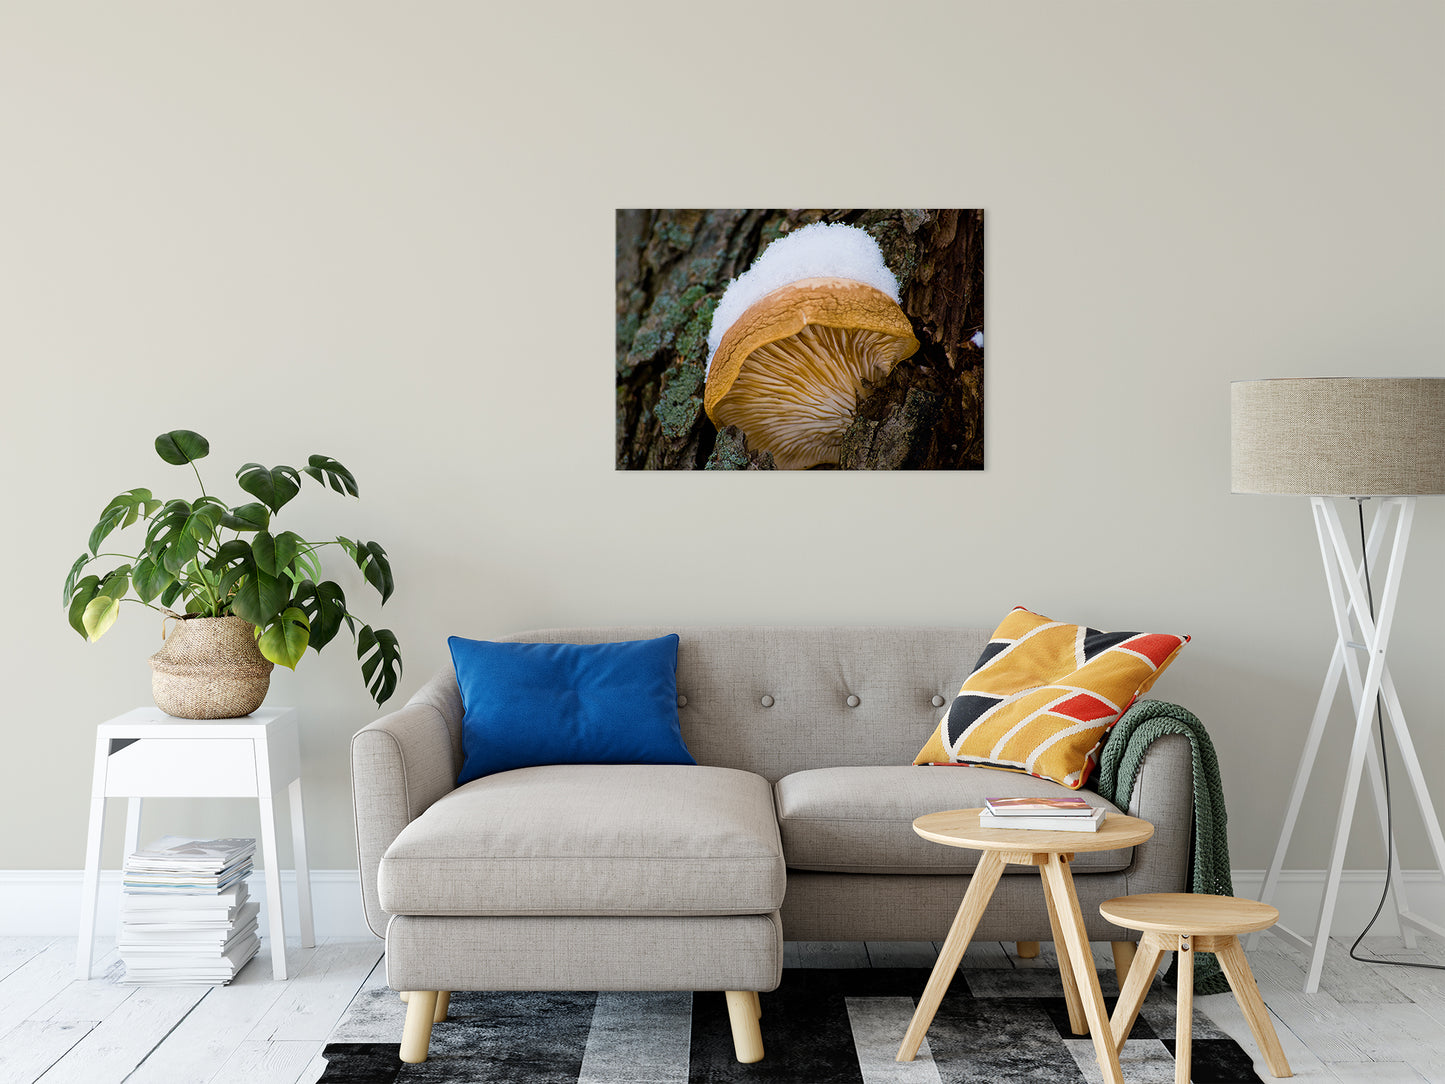 Snow Fungus Botanical / Nature Photo Fine Art Canvas Wall Art Prints 24" x 36" - PIPAFINEART